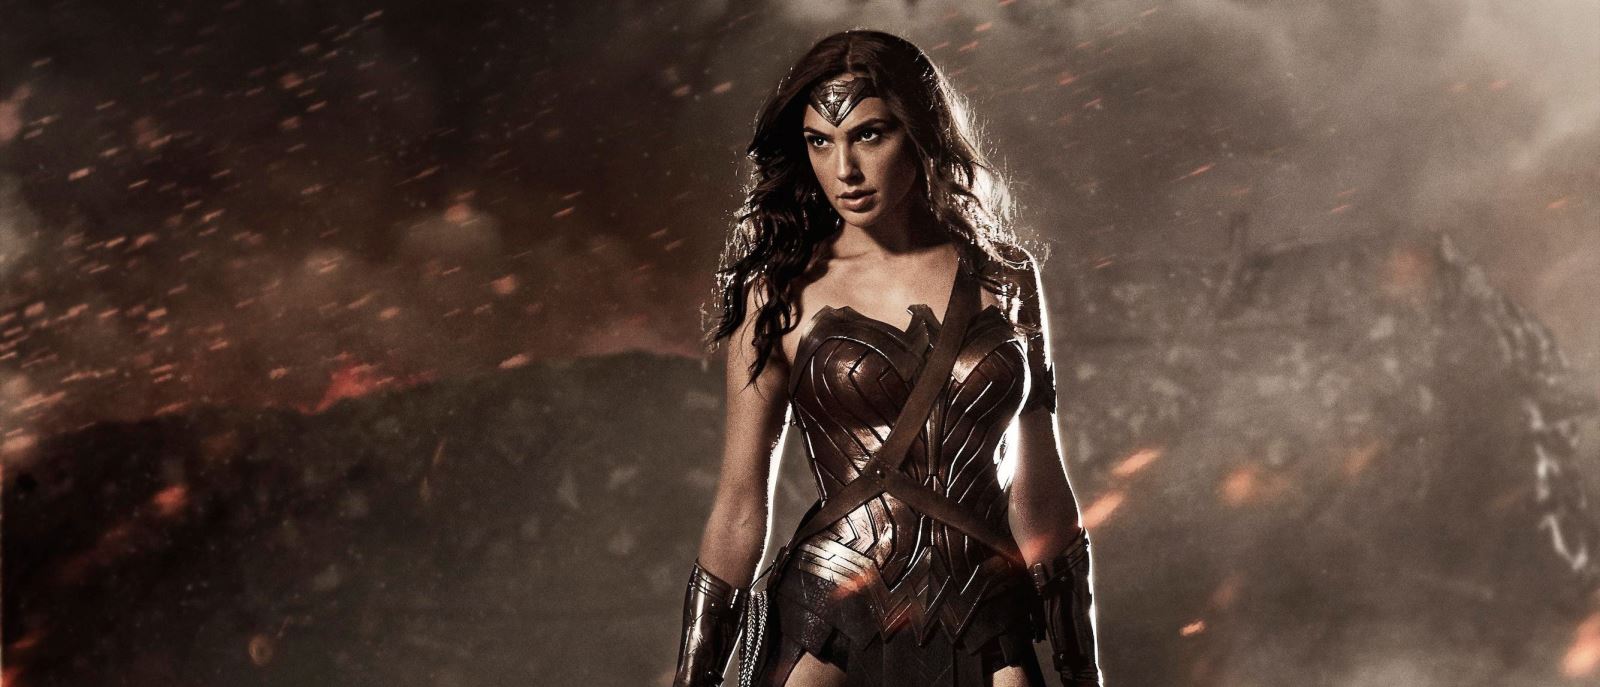 Haftanın Filmleri: 25 Mart 2016 2 – Gal Gadot as Wonder Woman